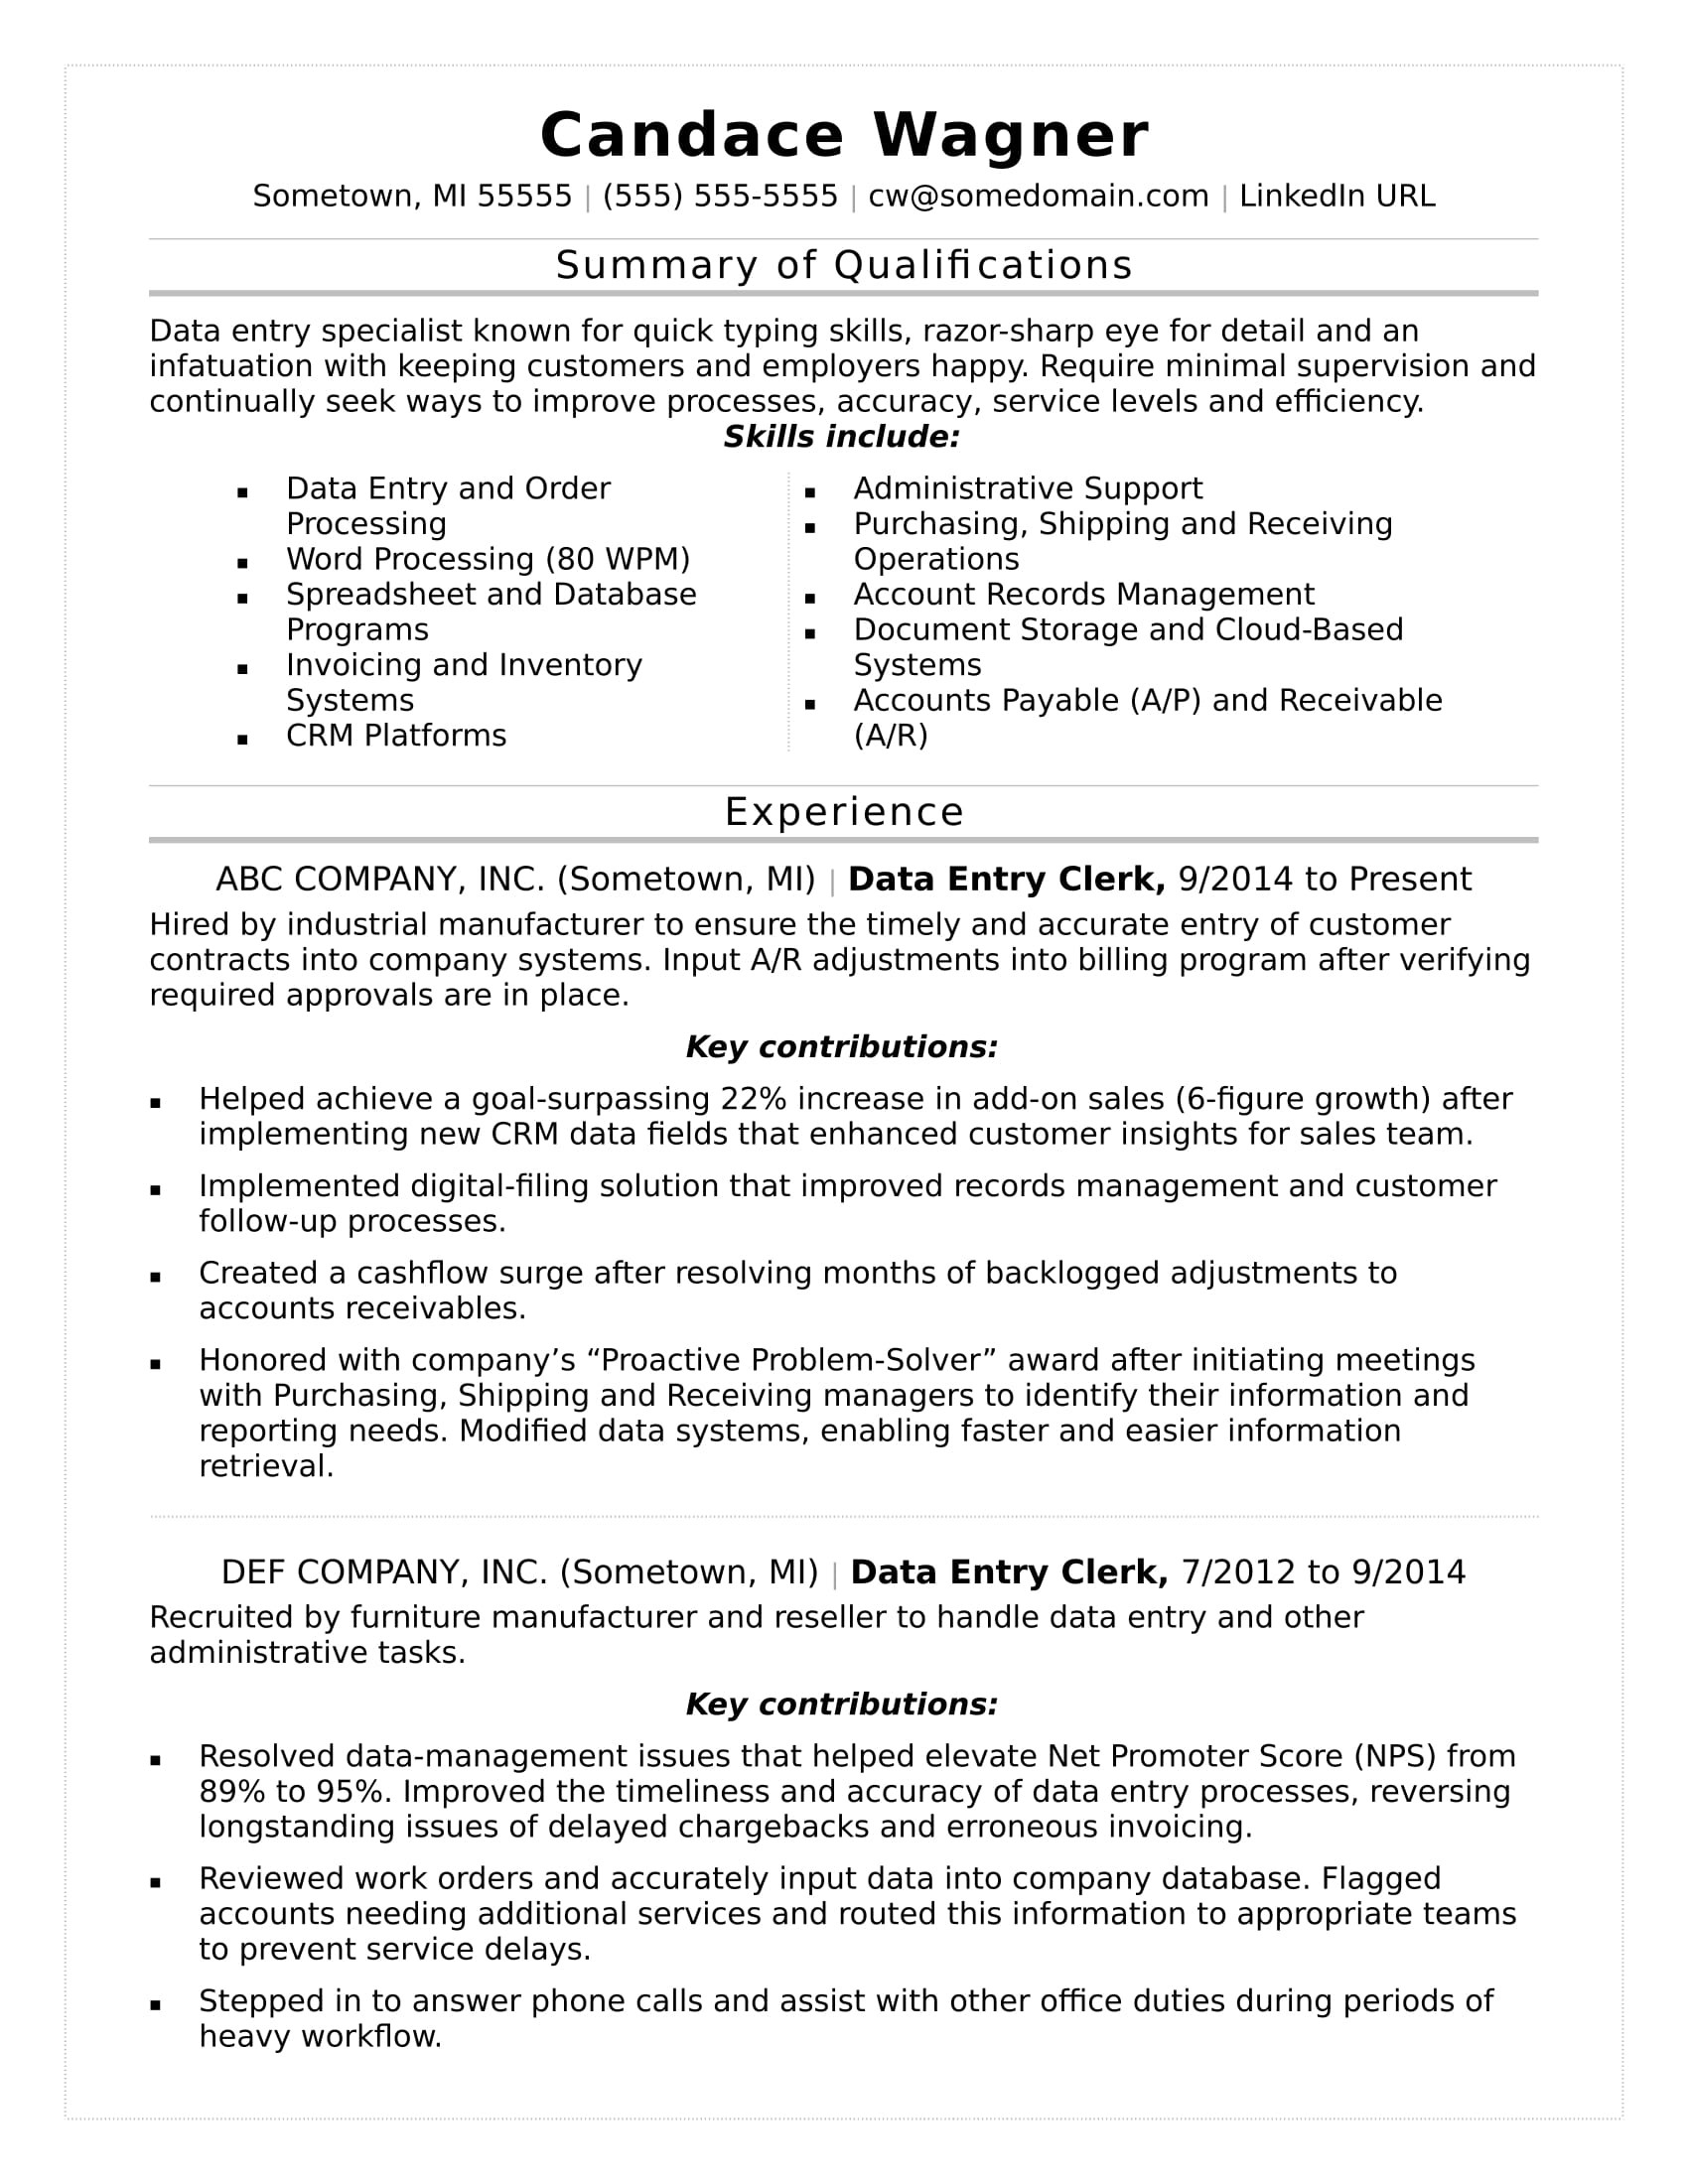 Sample Statement Of Qualifications for Resume Data Entry Resume Monster.com